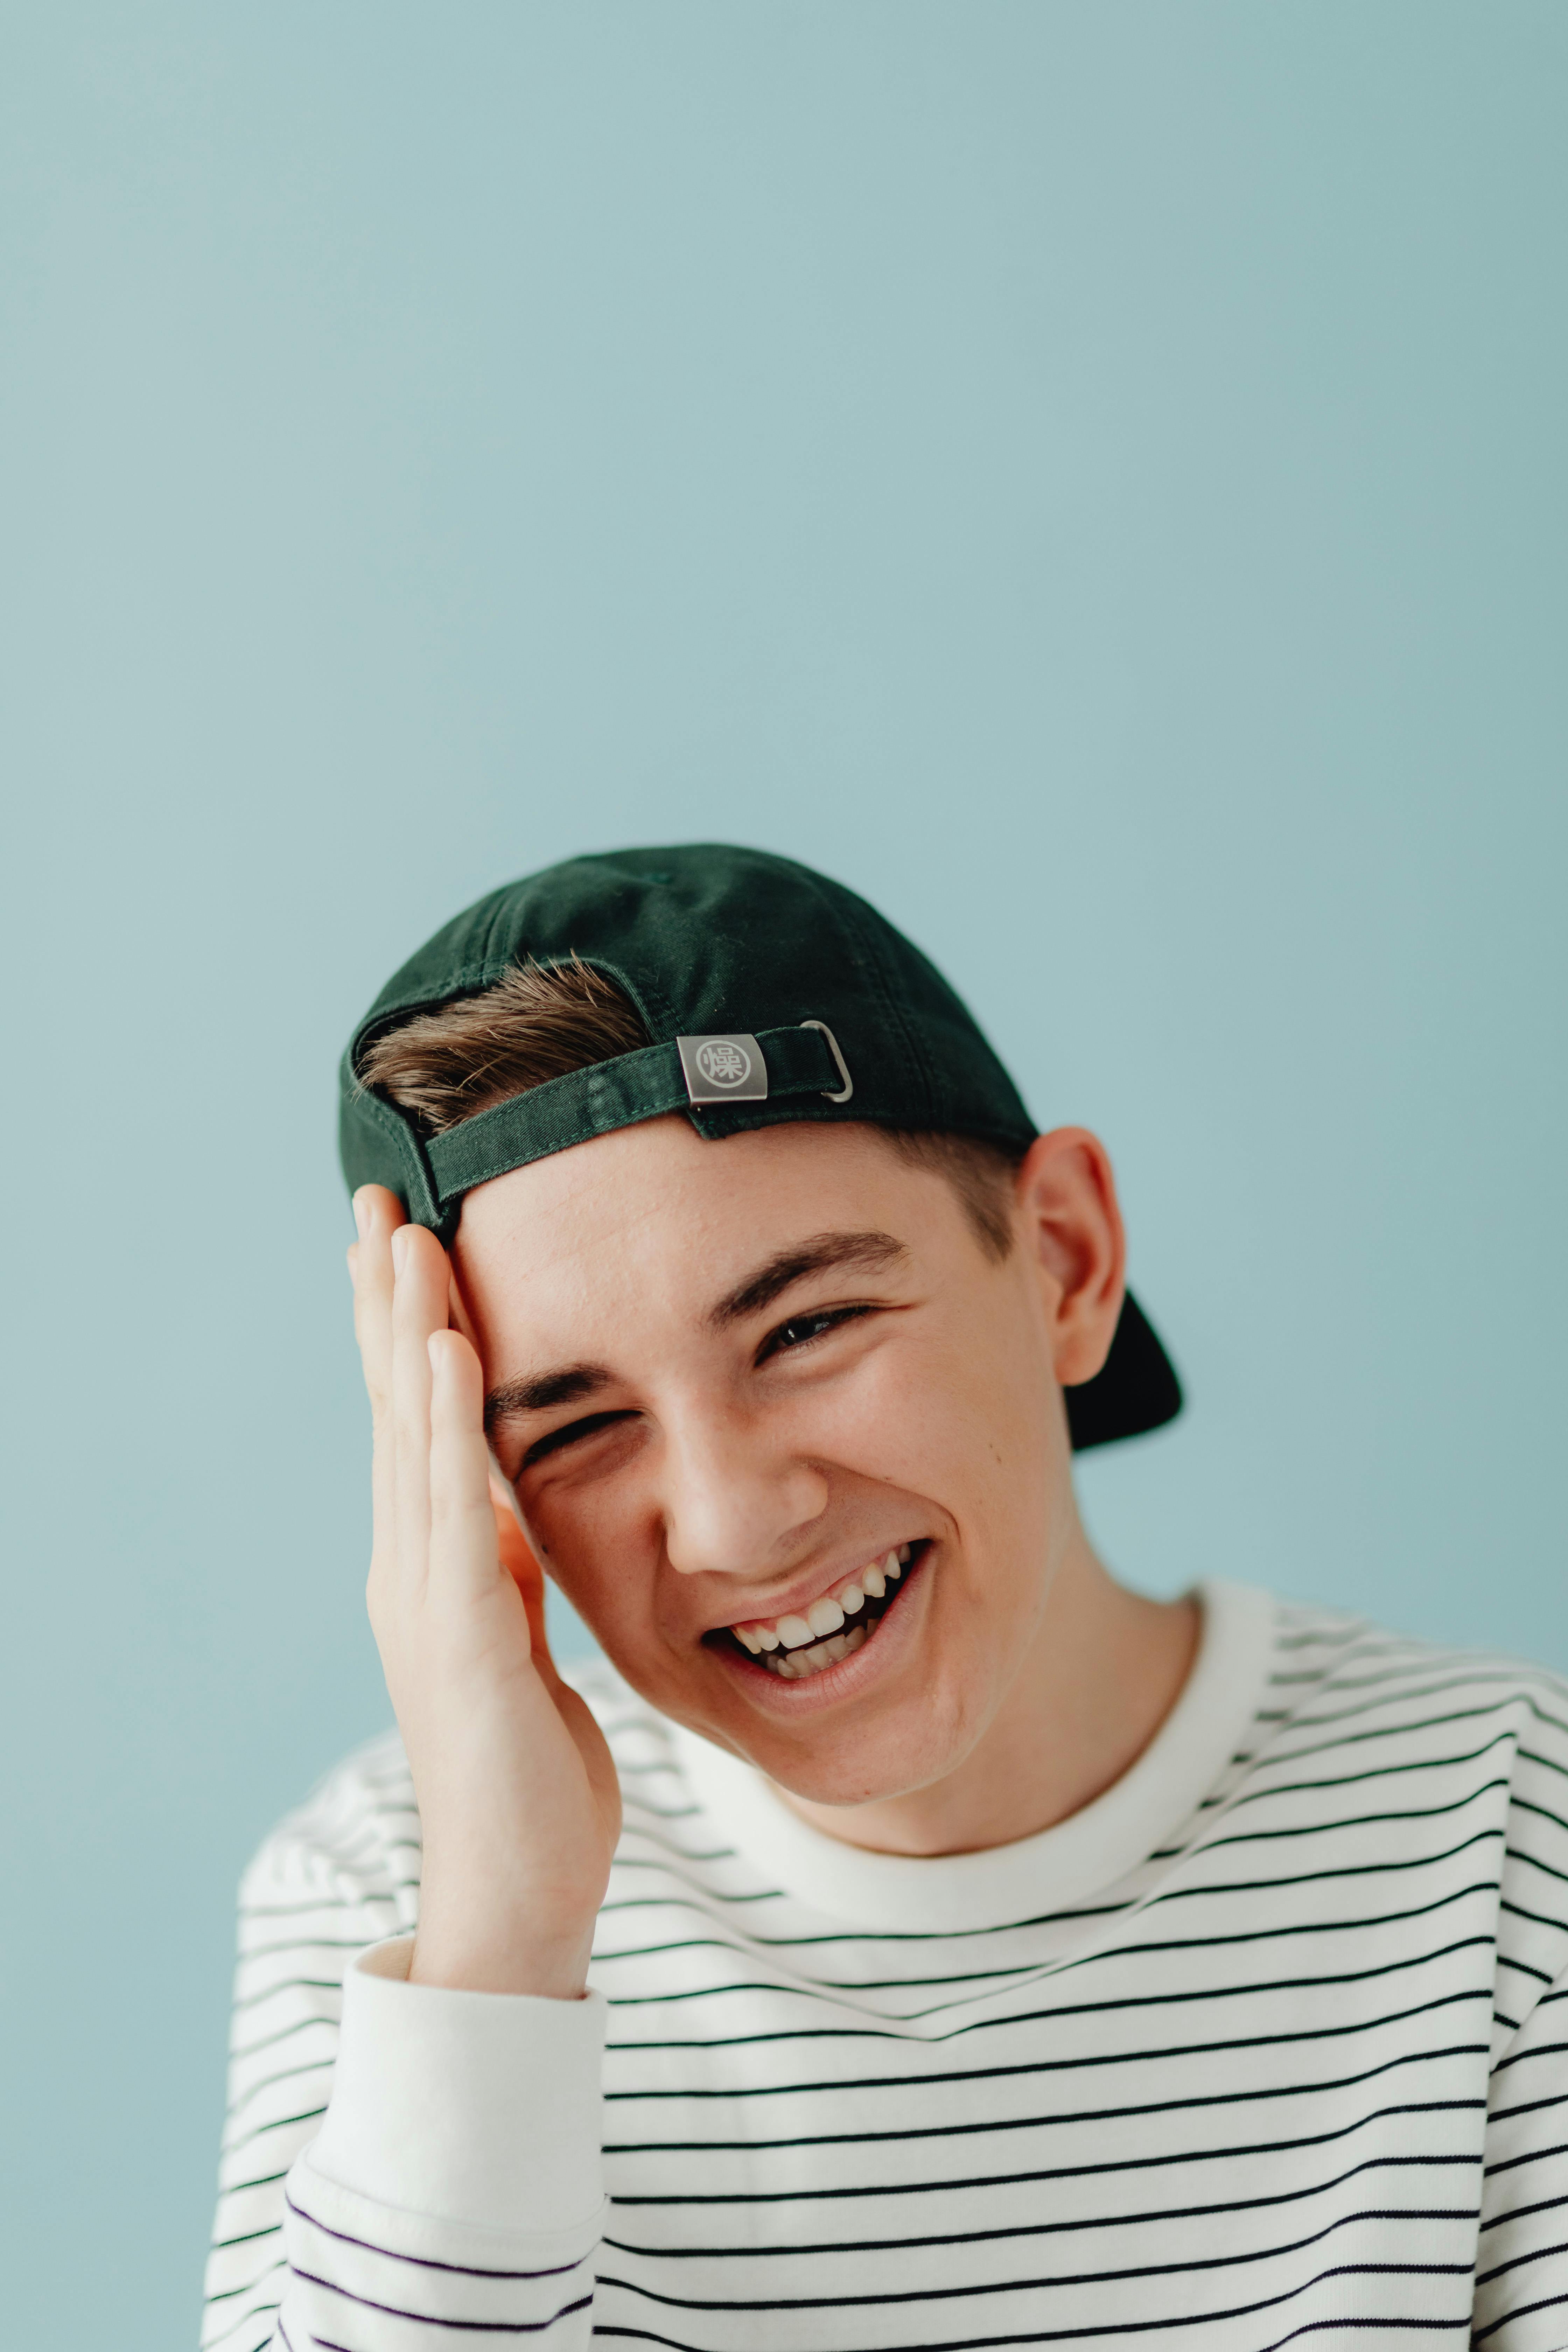 A teenage boy laughing | Source: Pexels